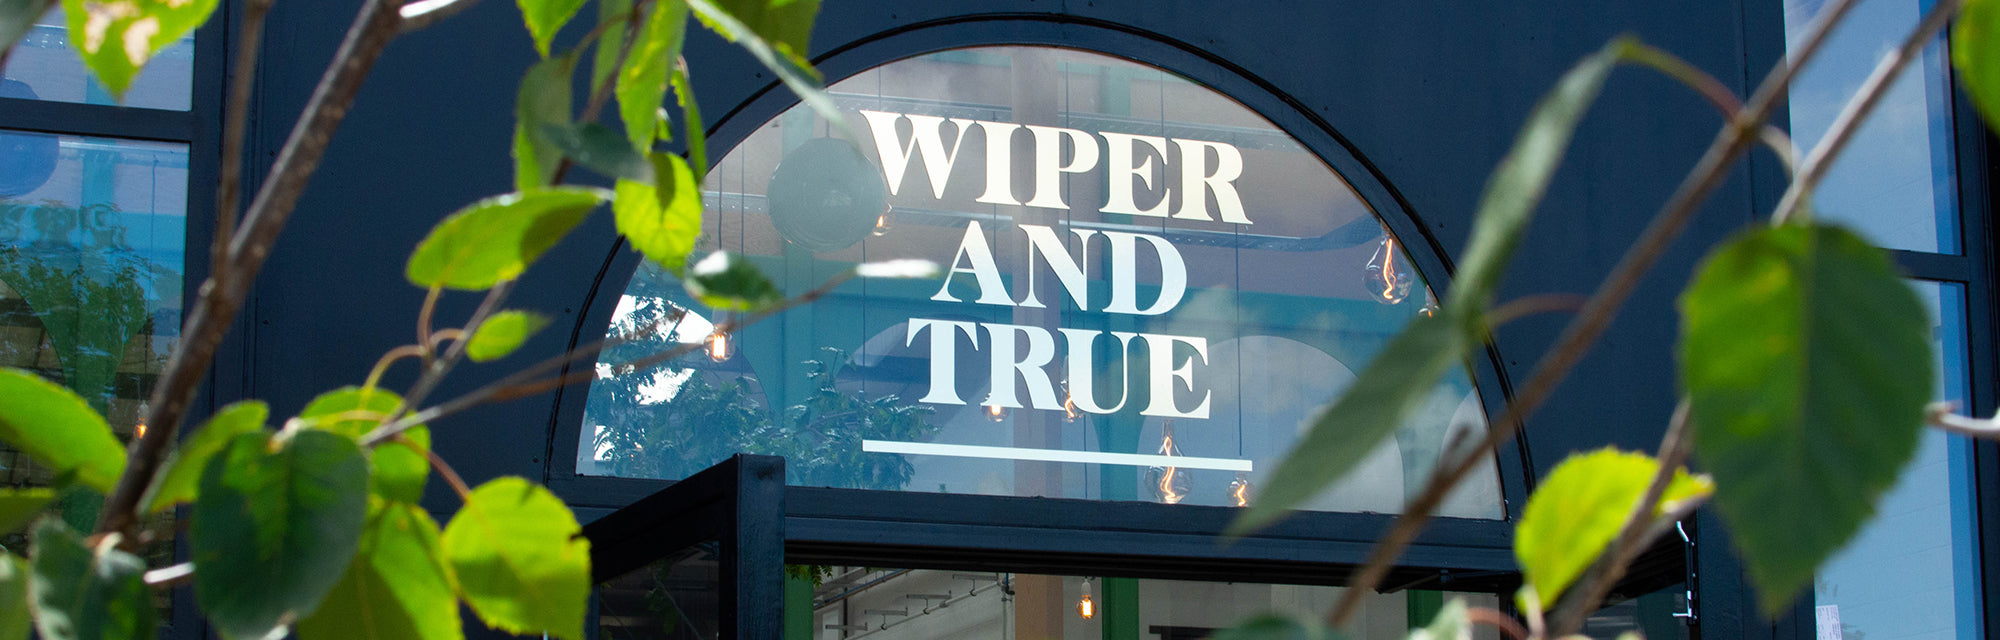 Wiper and True, Bristol